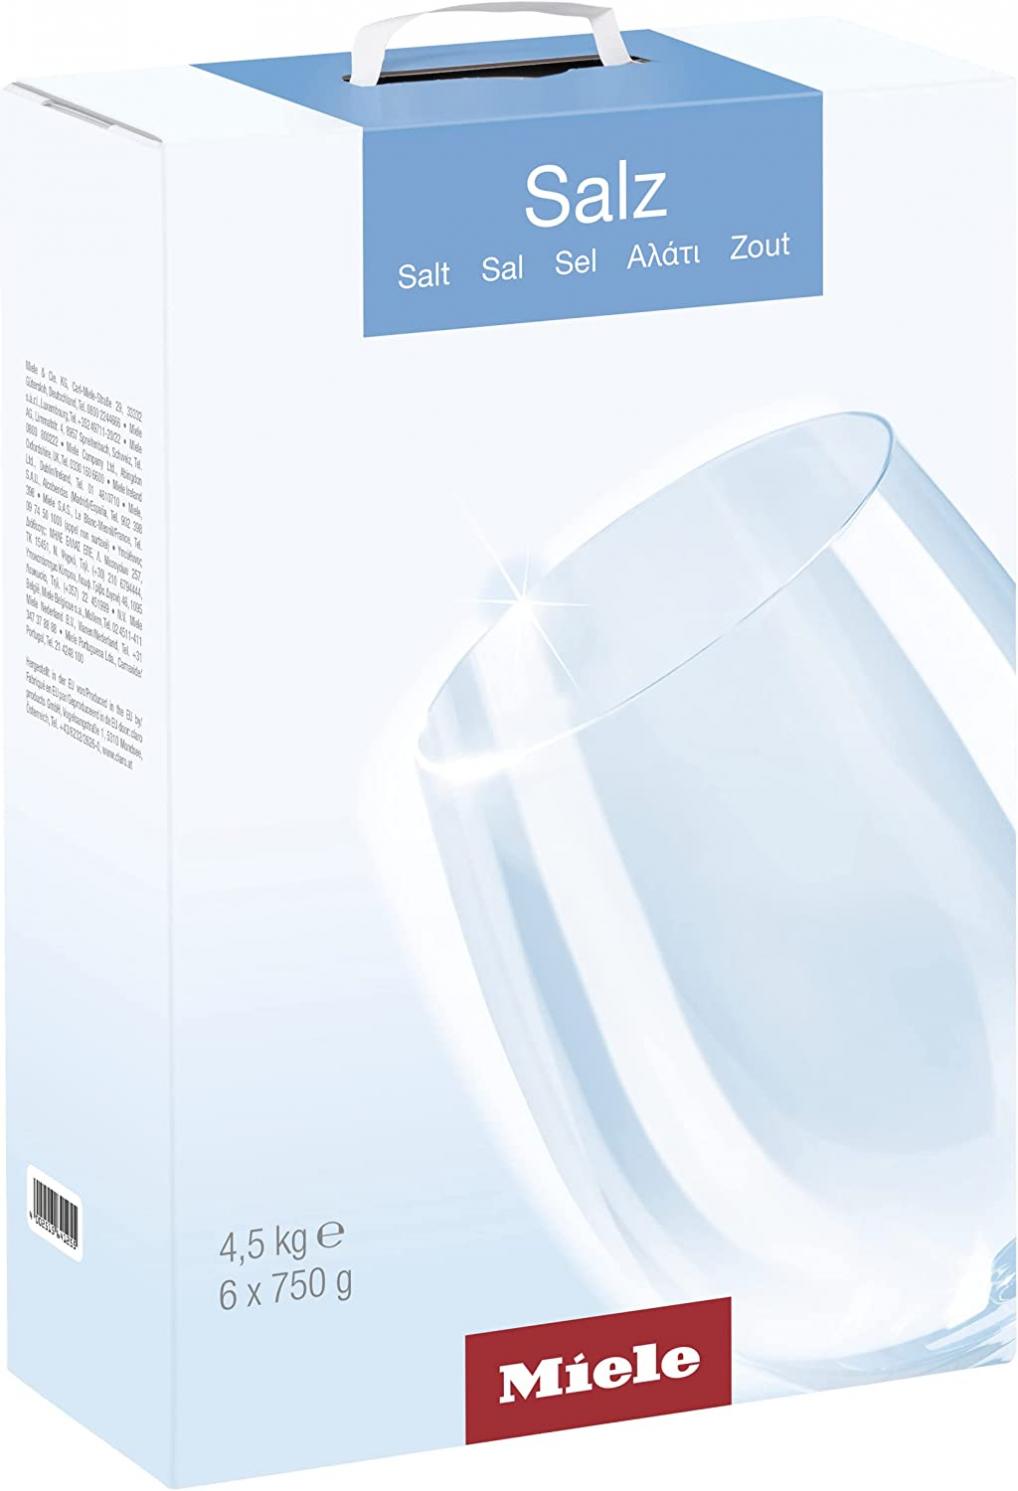 Miele Care Collection Dishwasher Reactivation Salt 9.9 lbs (4.5 Kg)